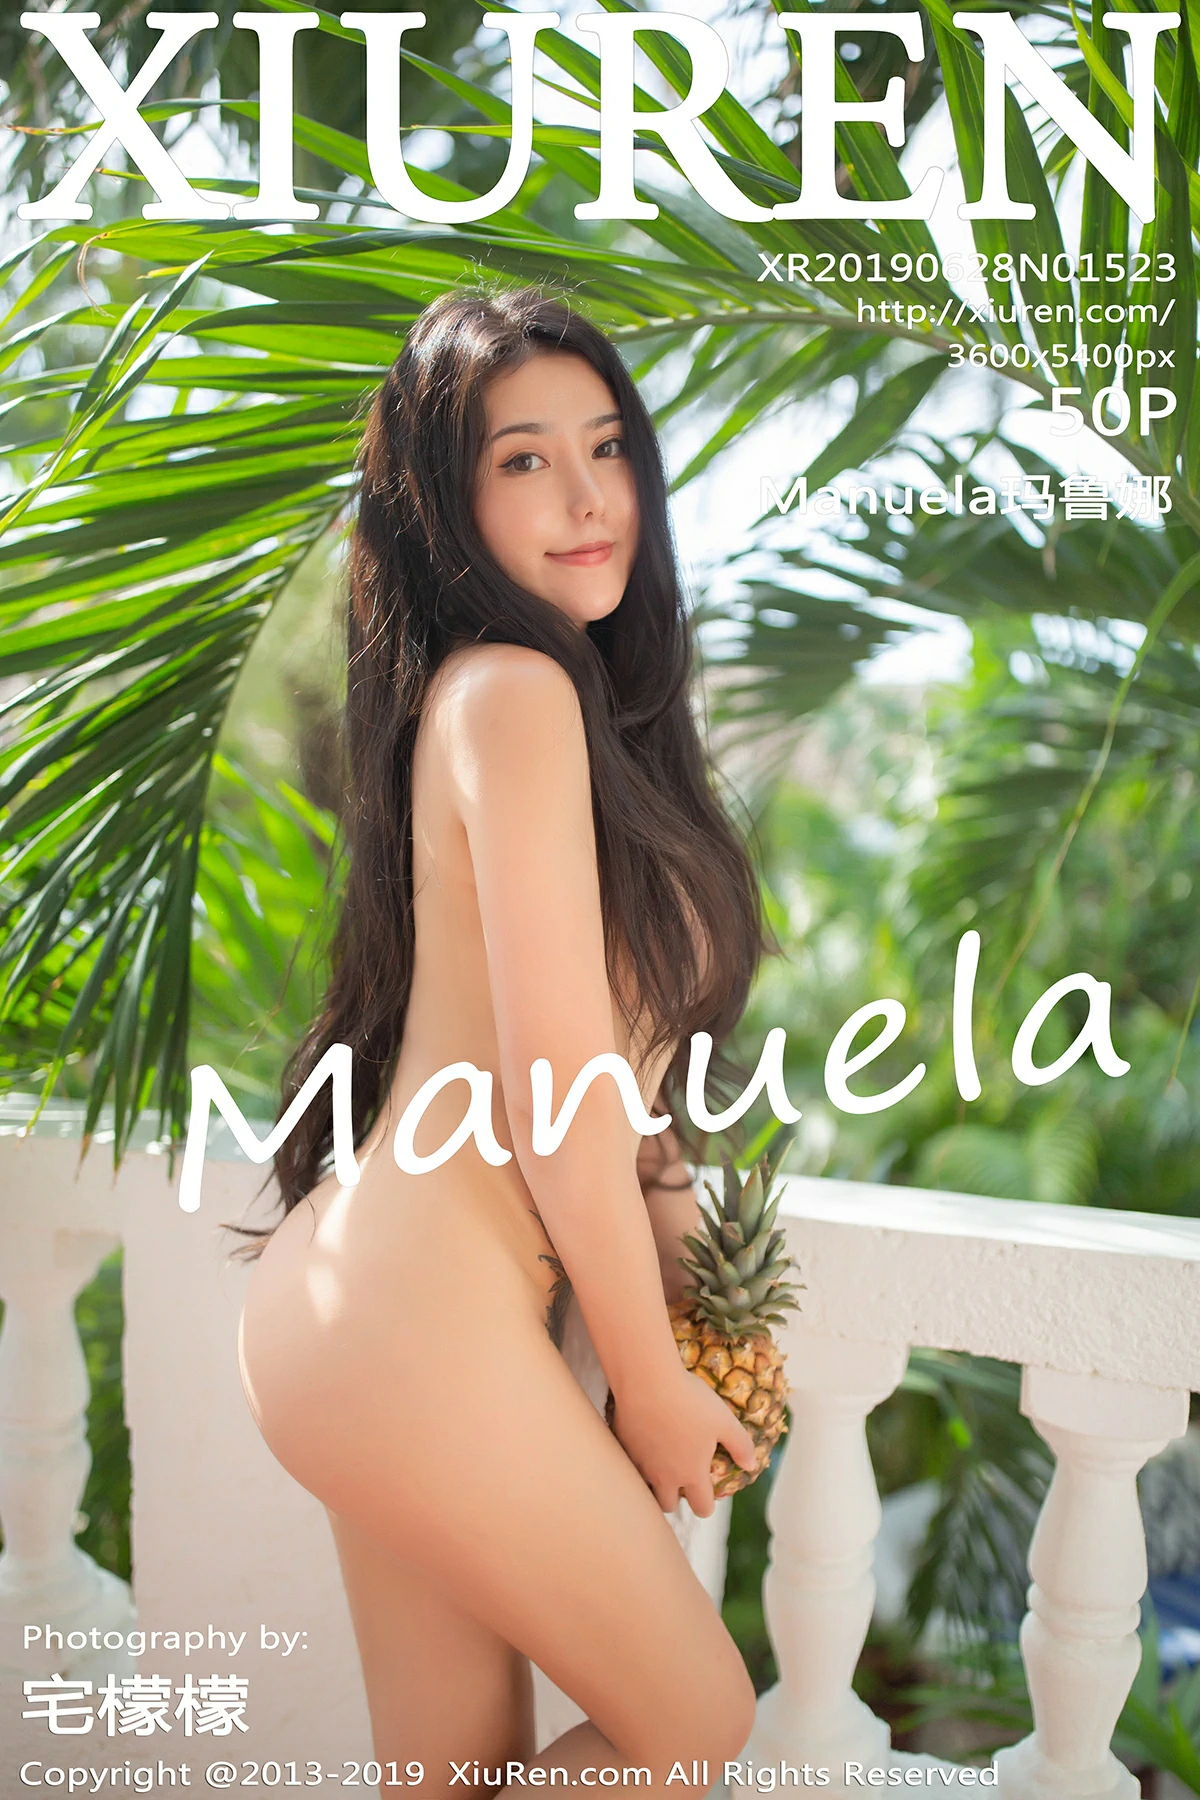 [XIUREN秀人网]XR20190628N01523 Manuela玛鲁娜 全裸性感玉体私房写真集,